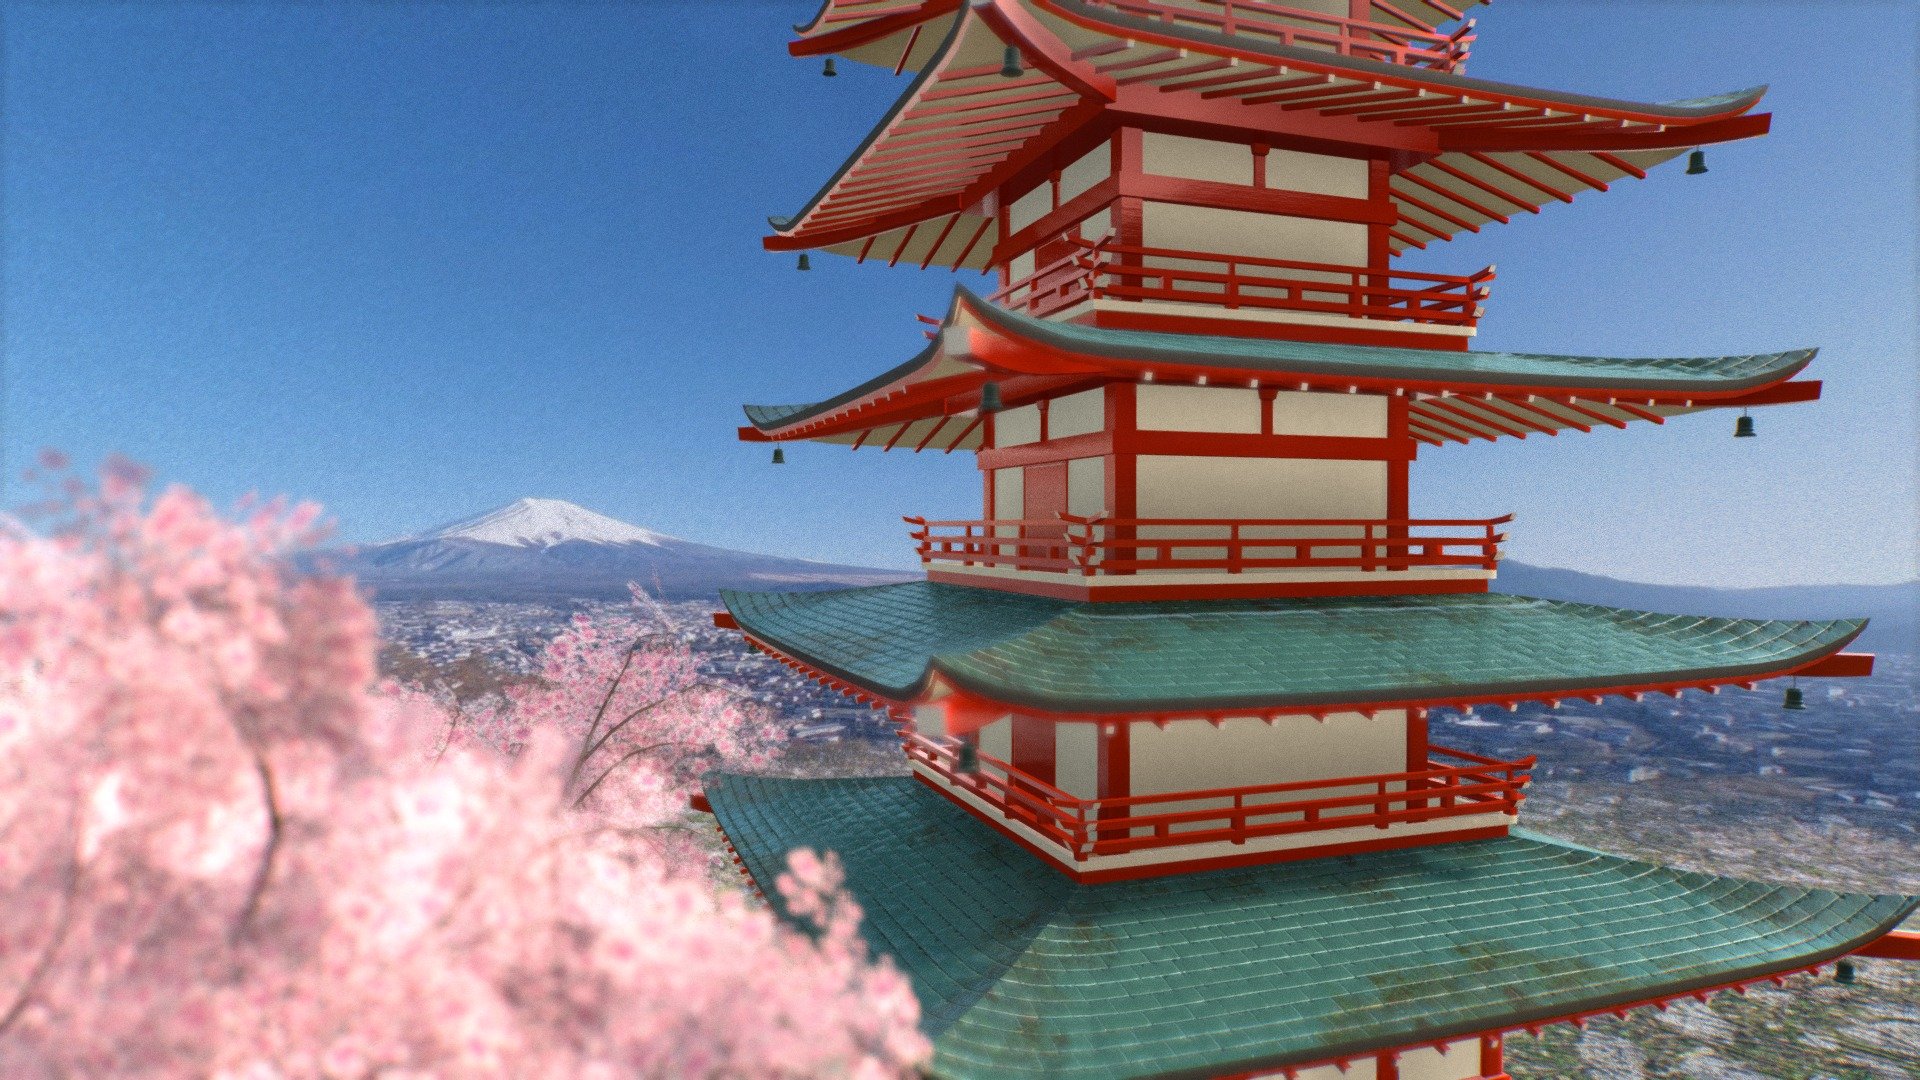 Building Blocks - Japanese Landmark 3D Model - Mt Chureito Pagoda